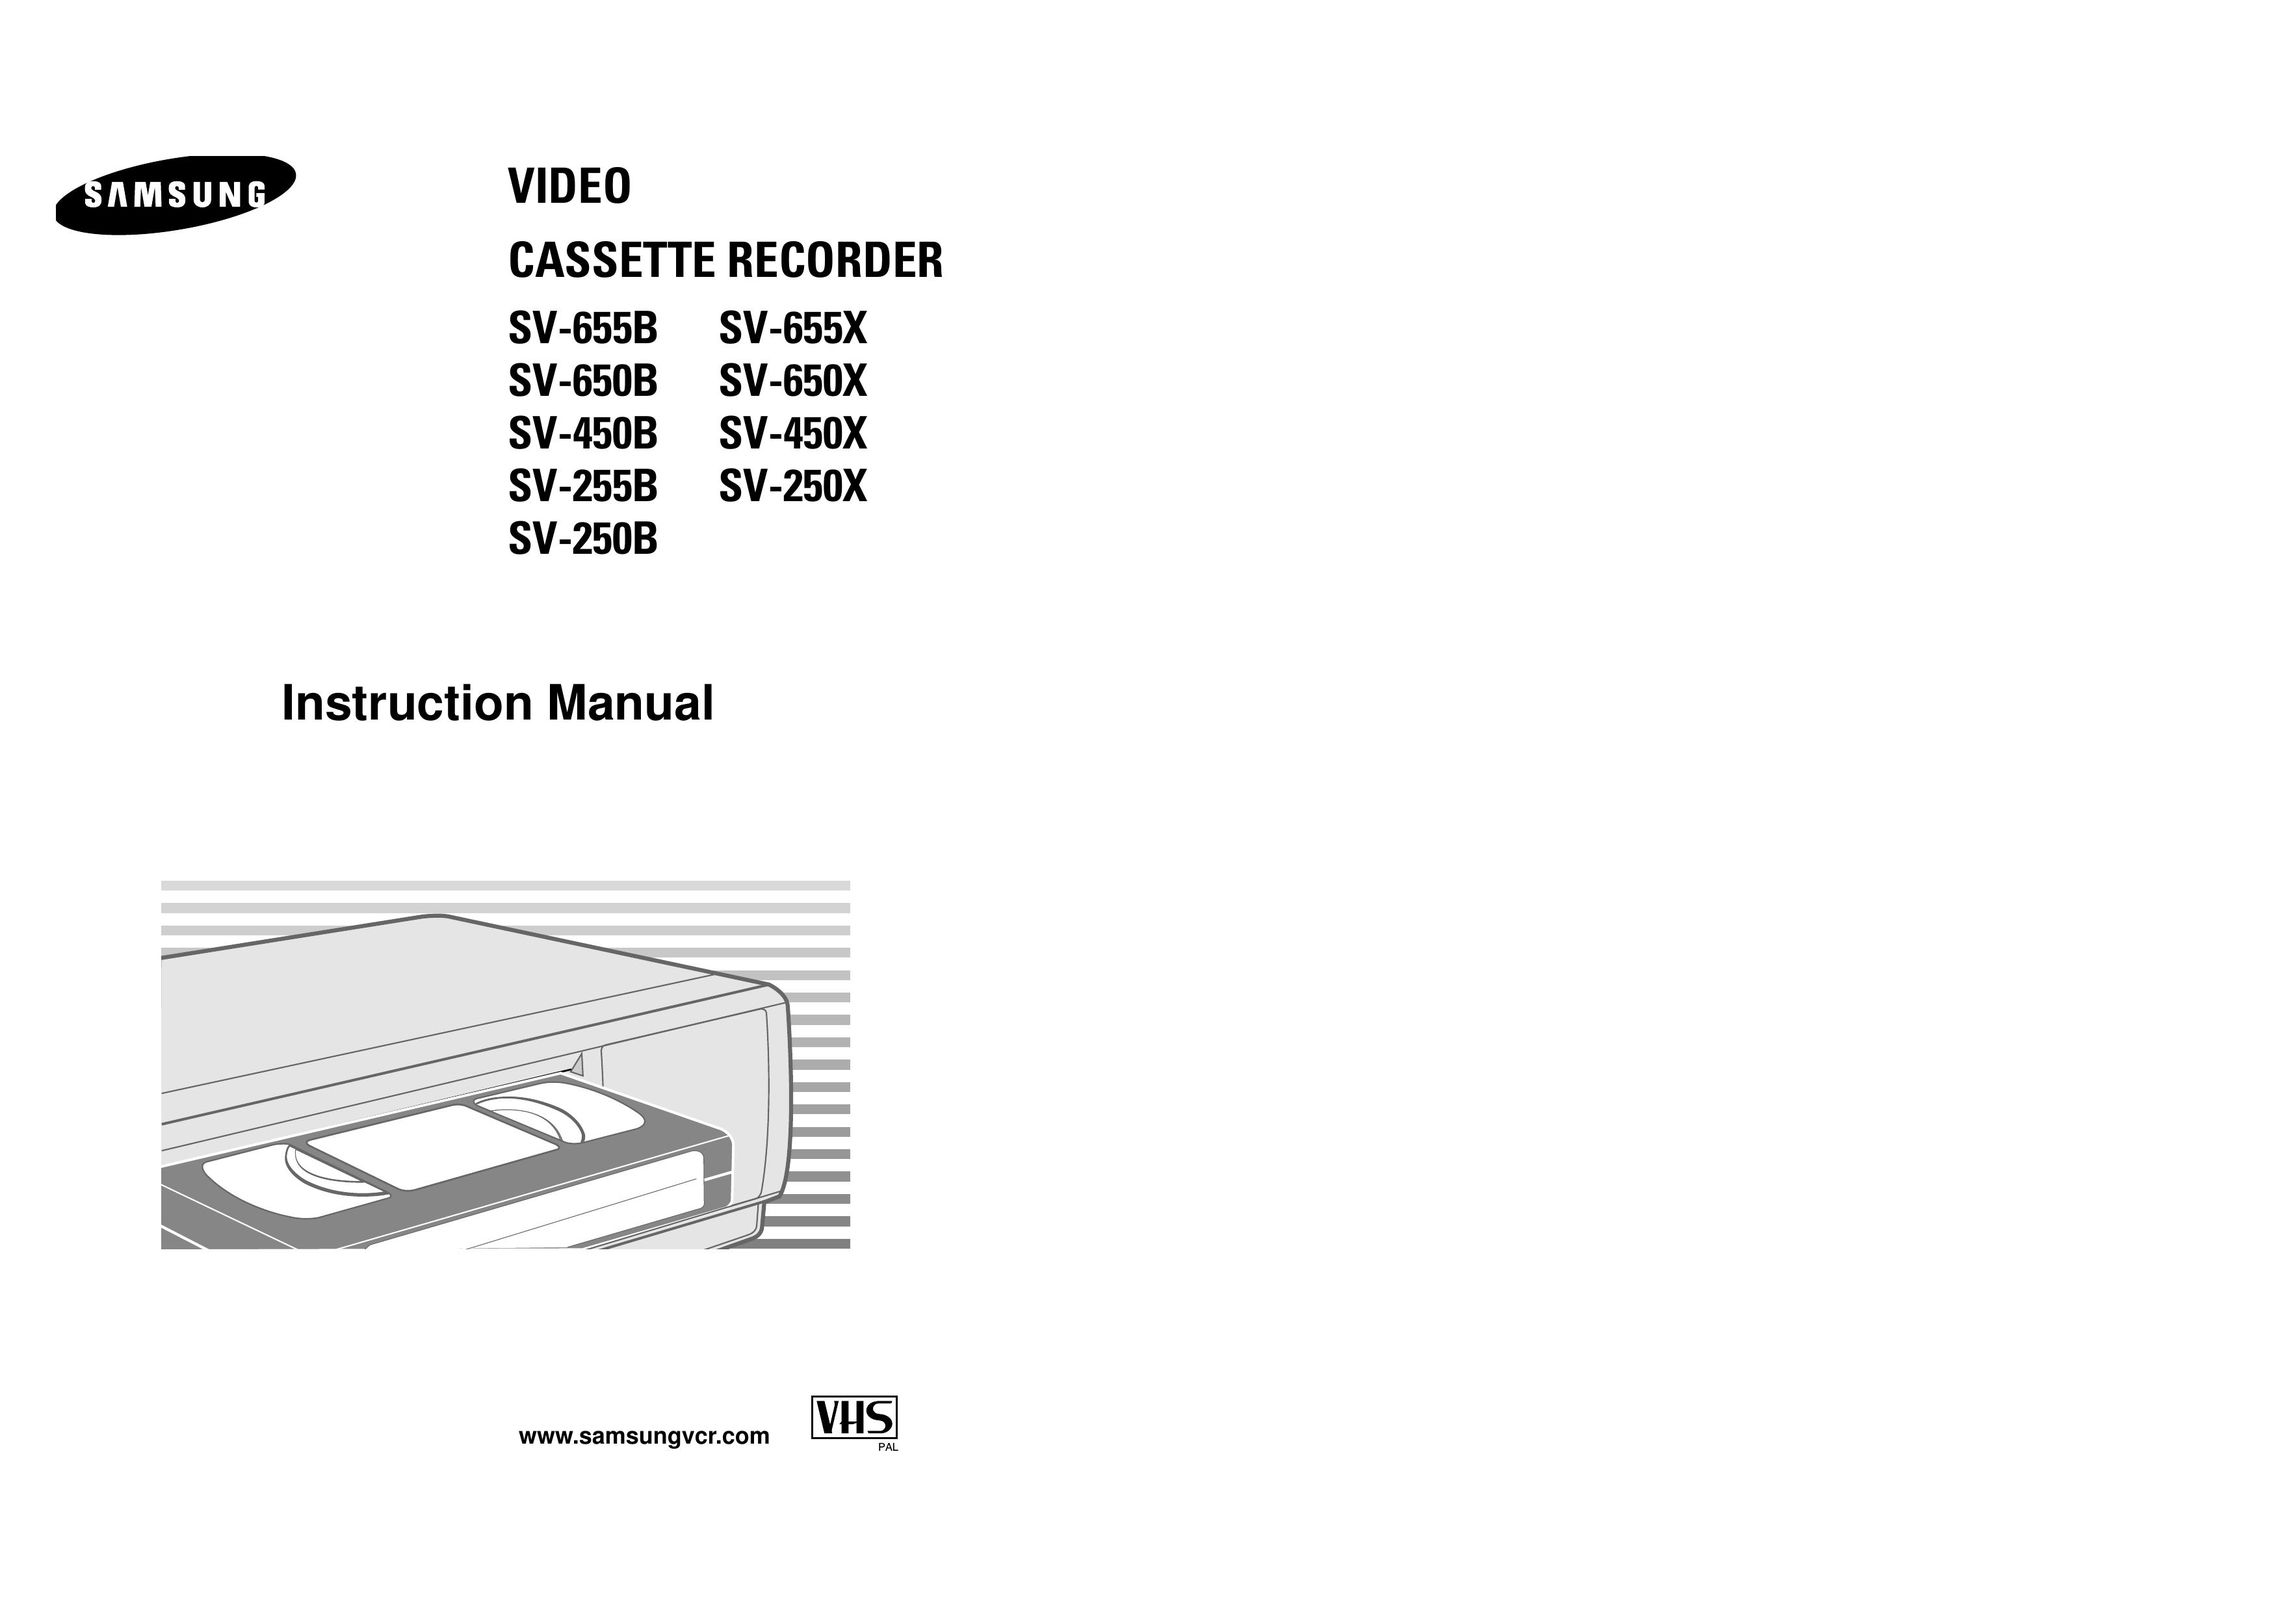 Samsung SV-655X VCR User Manual